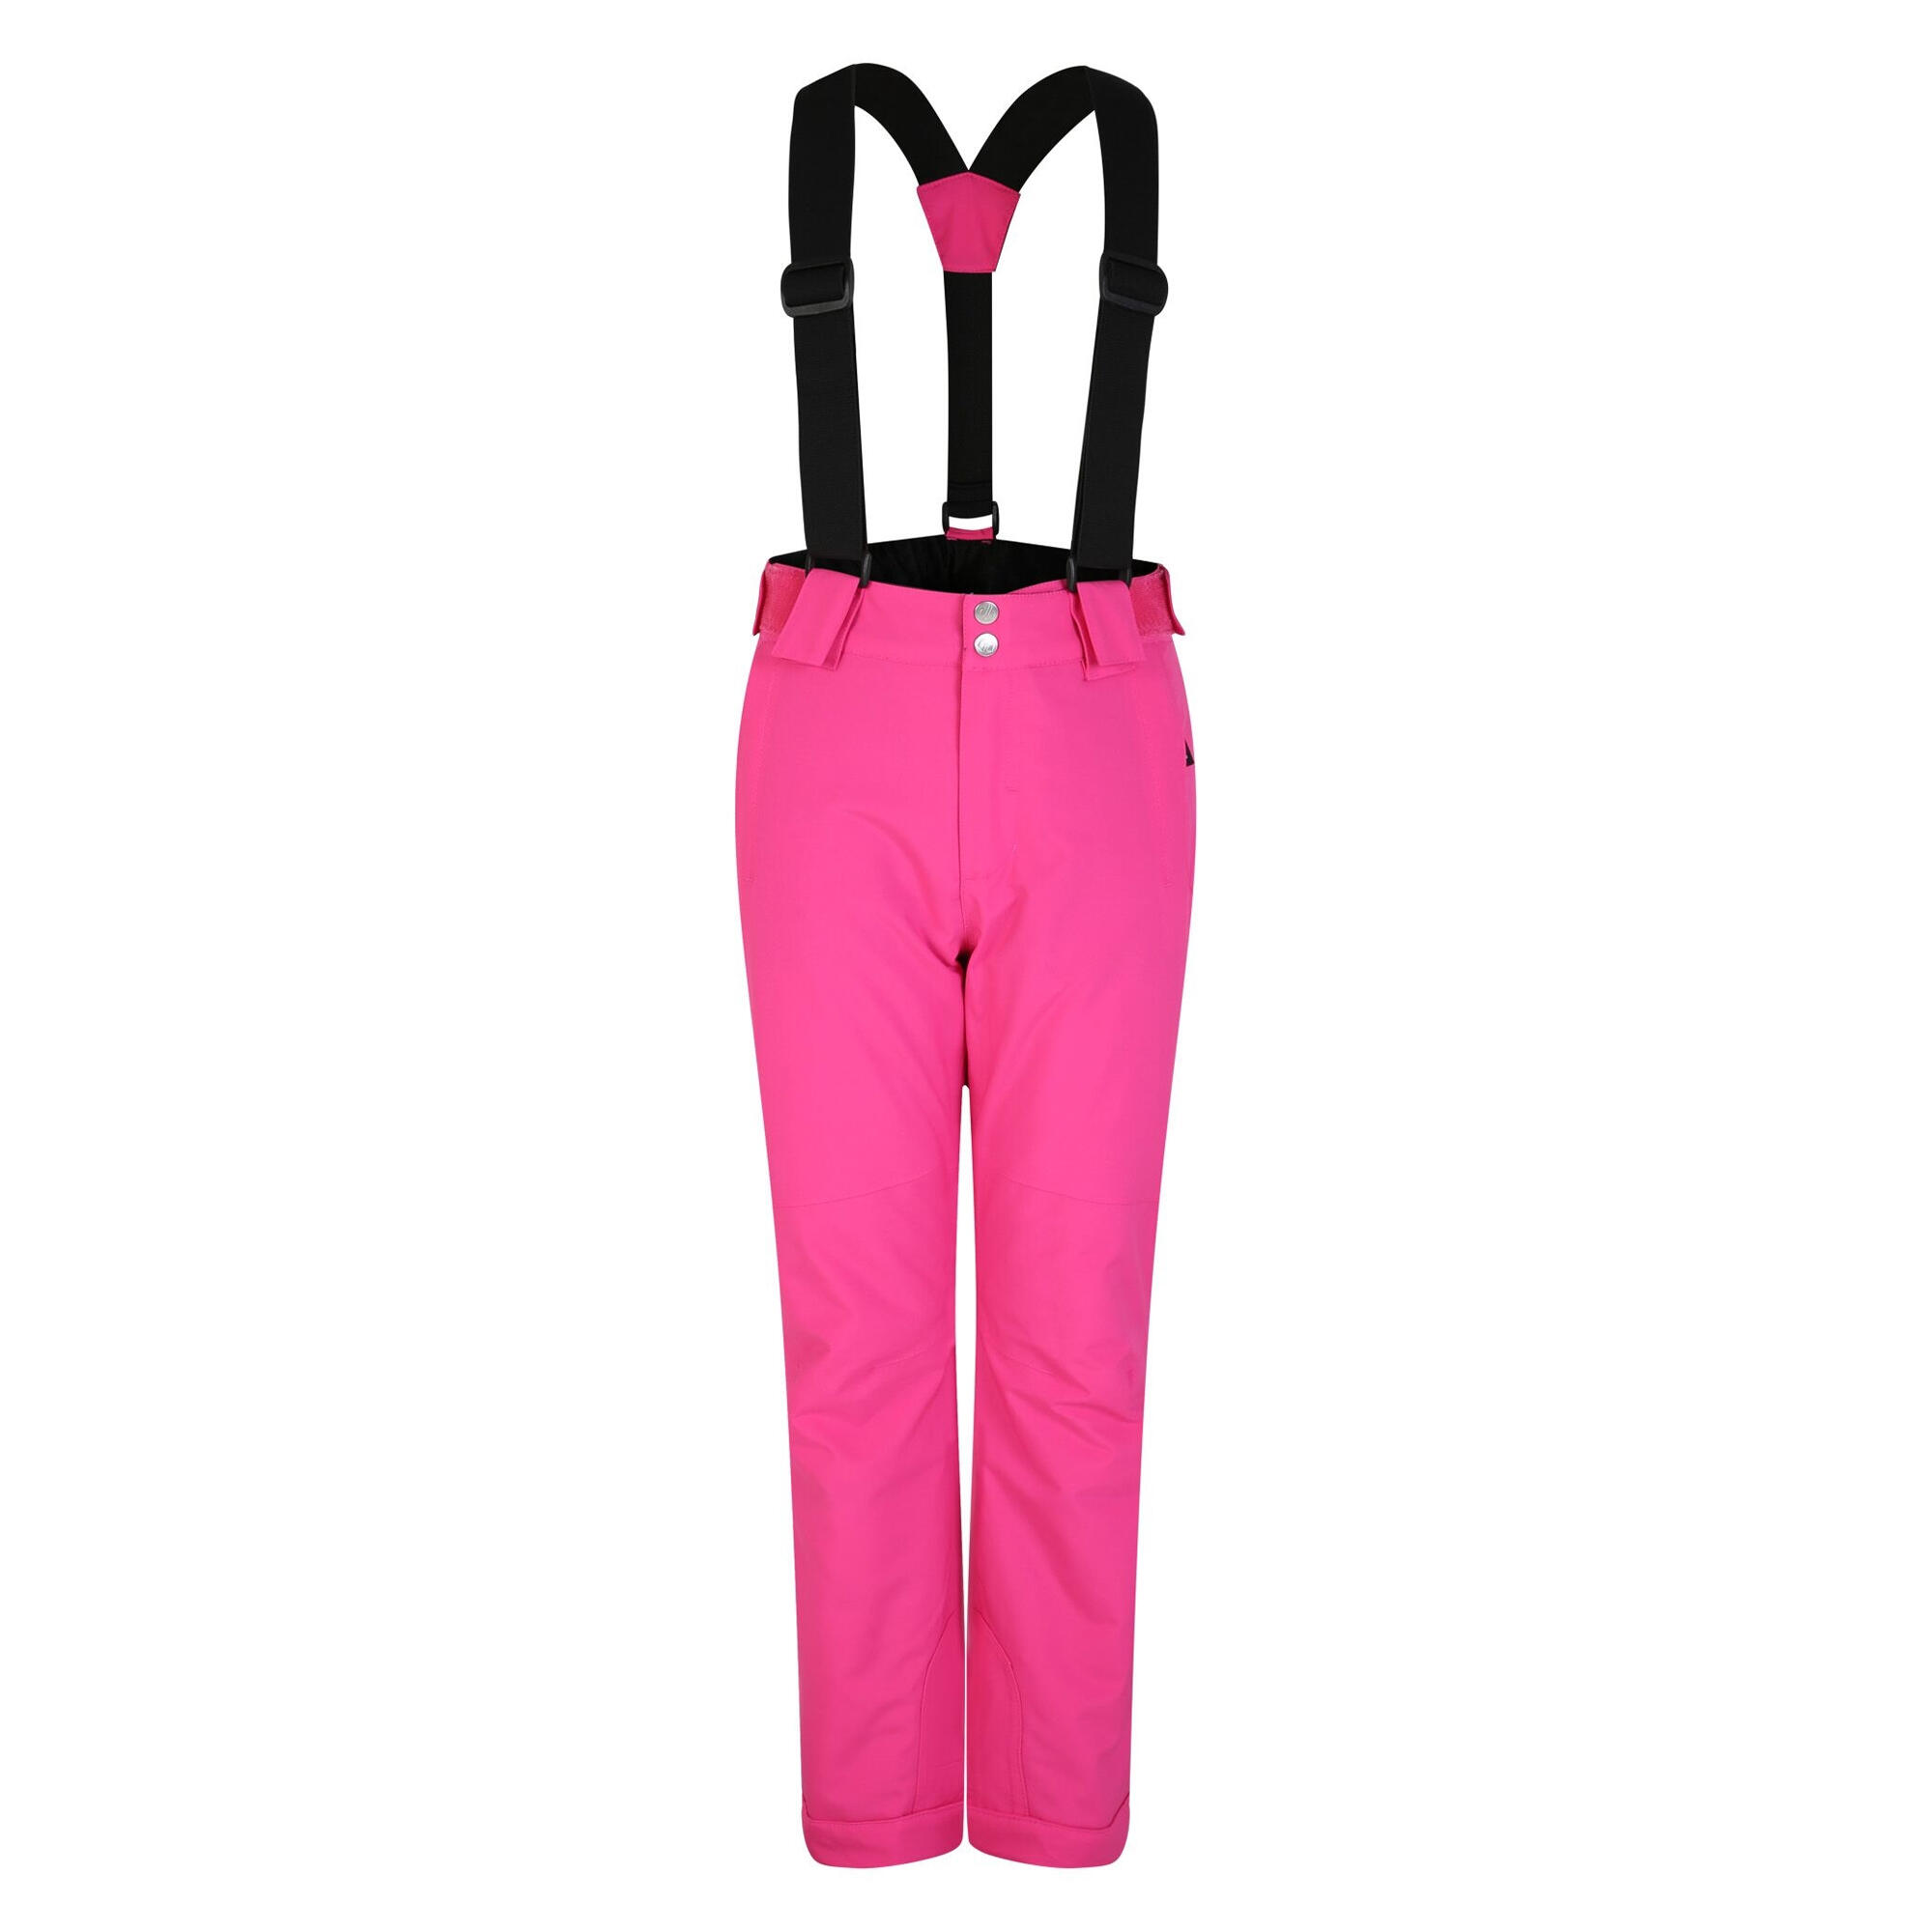 Childrens/Kids Outmove II Ski Trousers (Pure Pink) 1/4